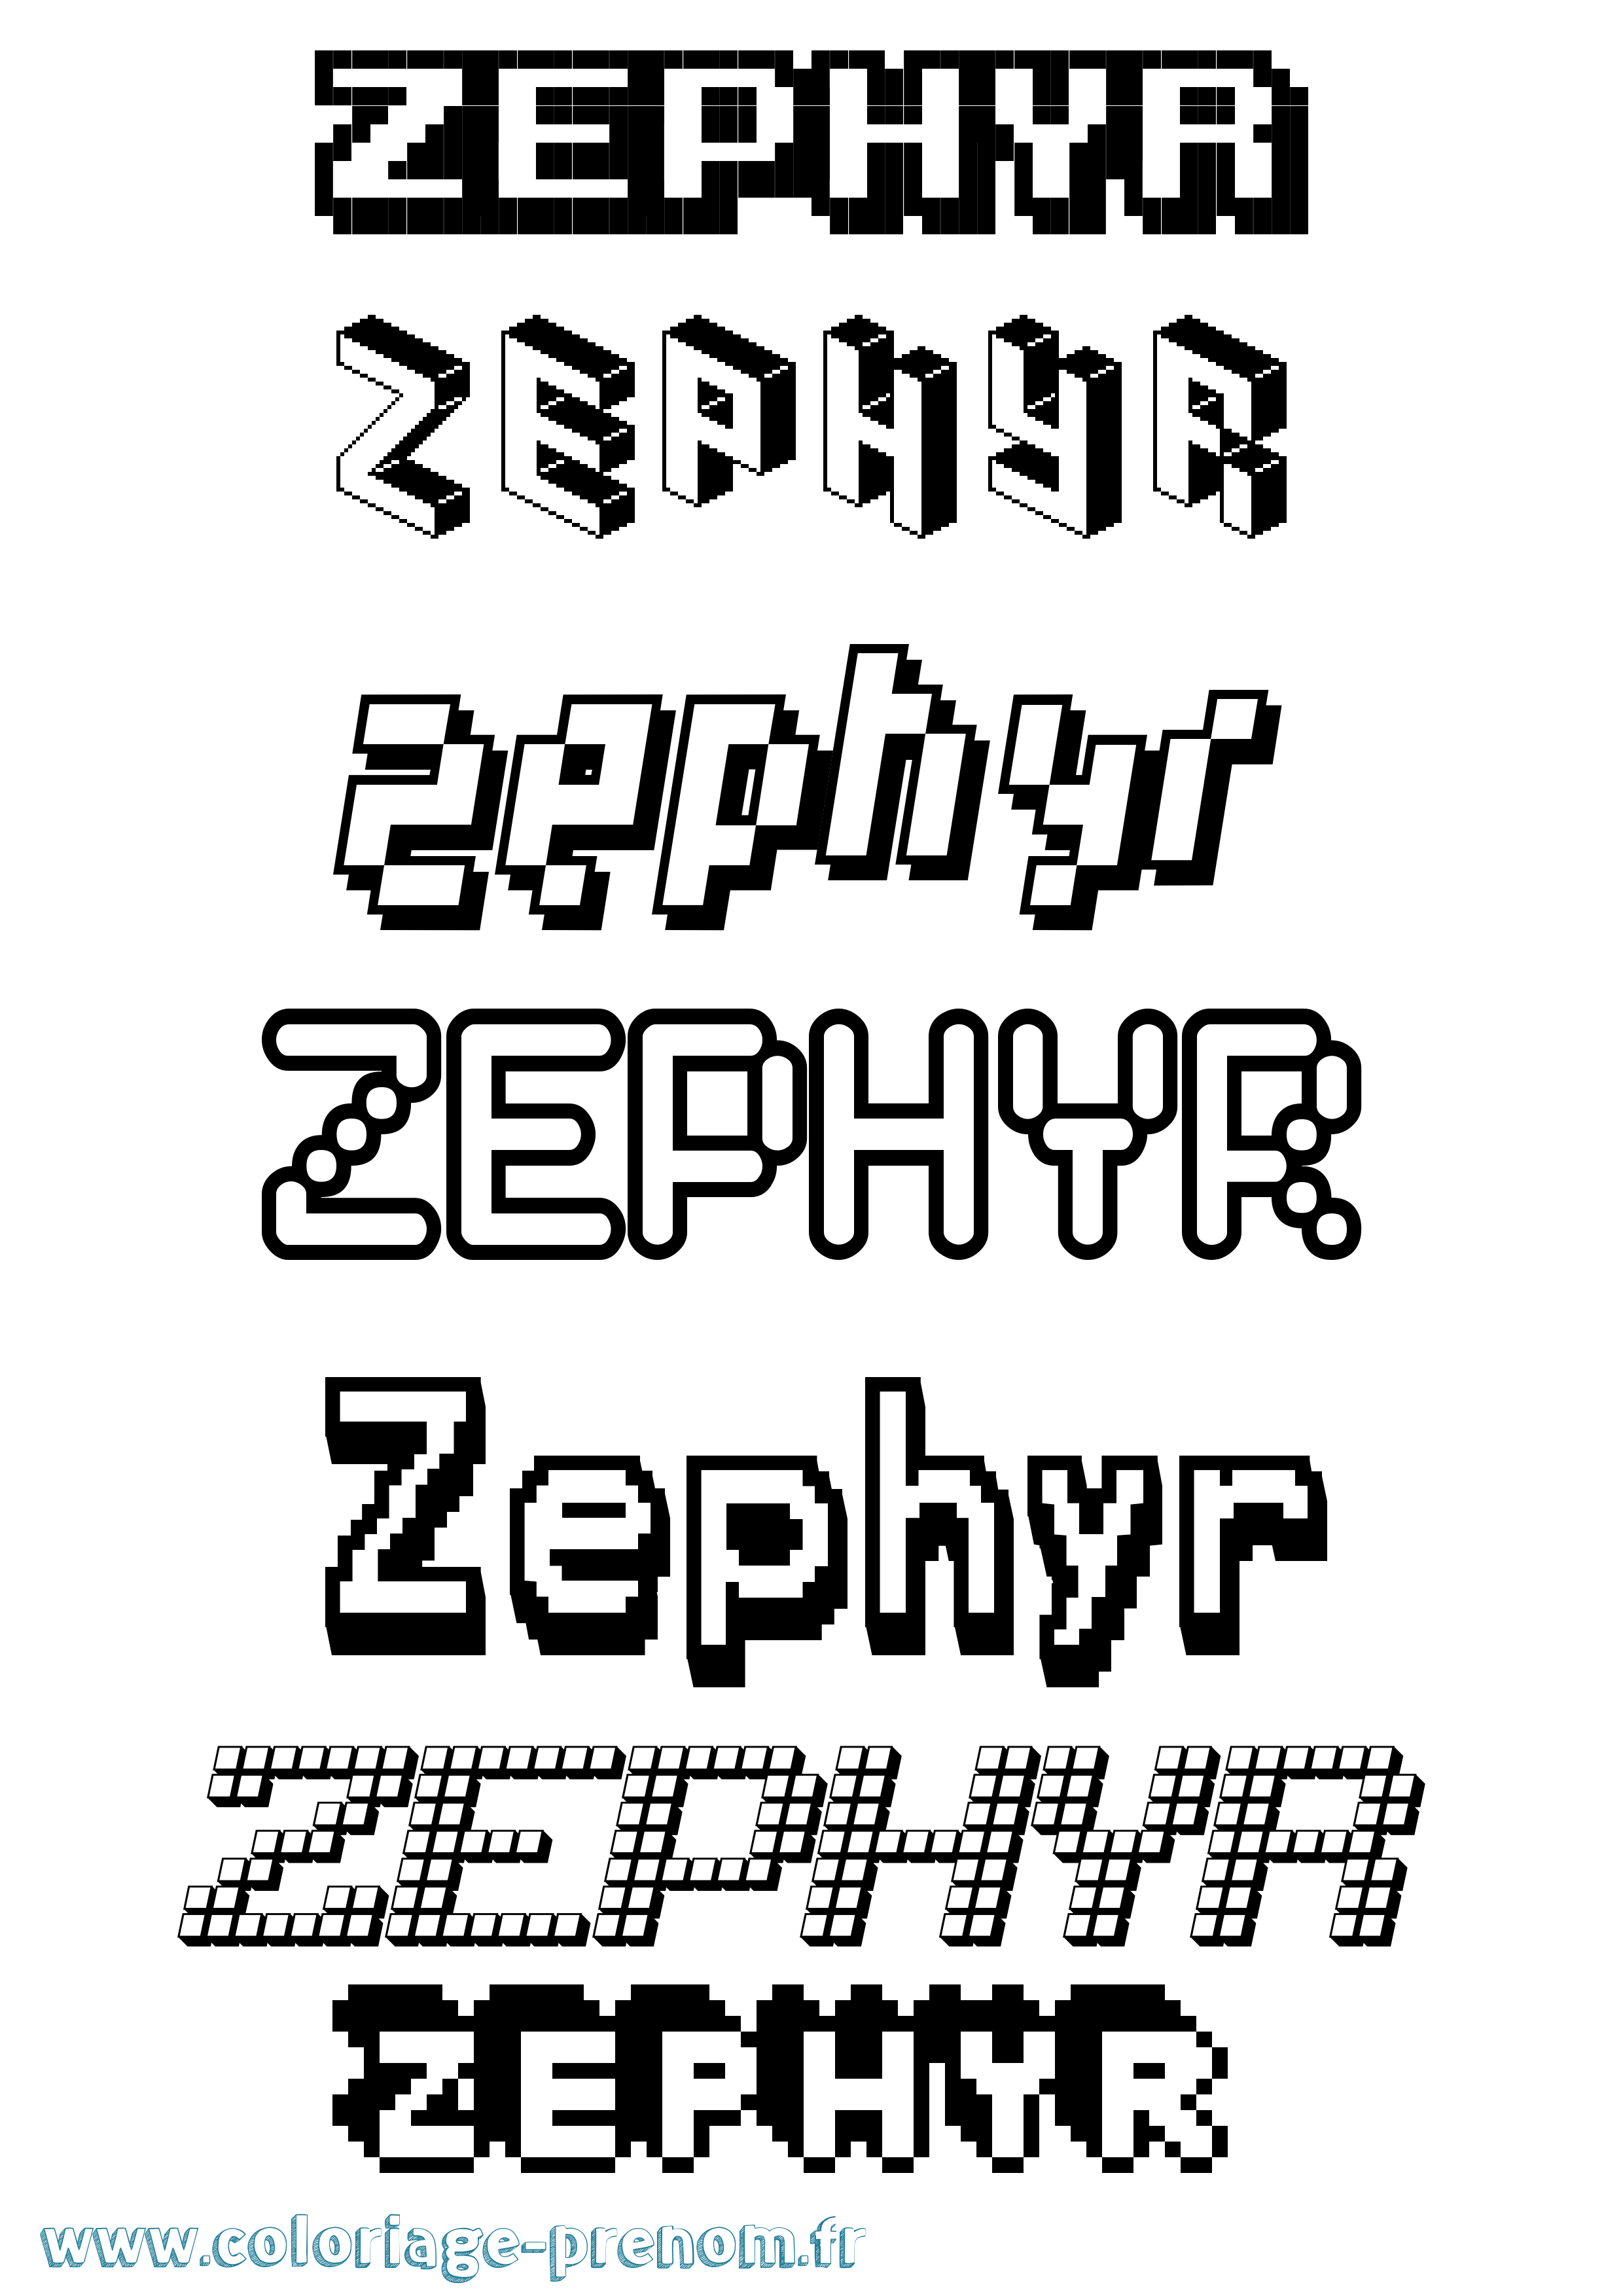 Coloriage prénom Zephyr